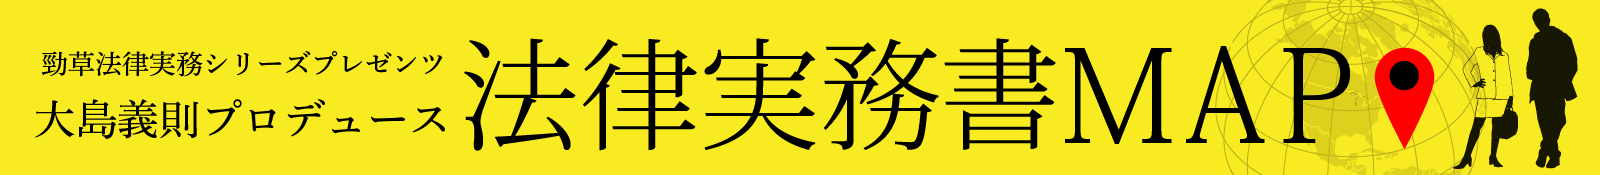 law-oshima-banner-2